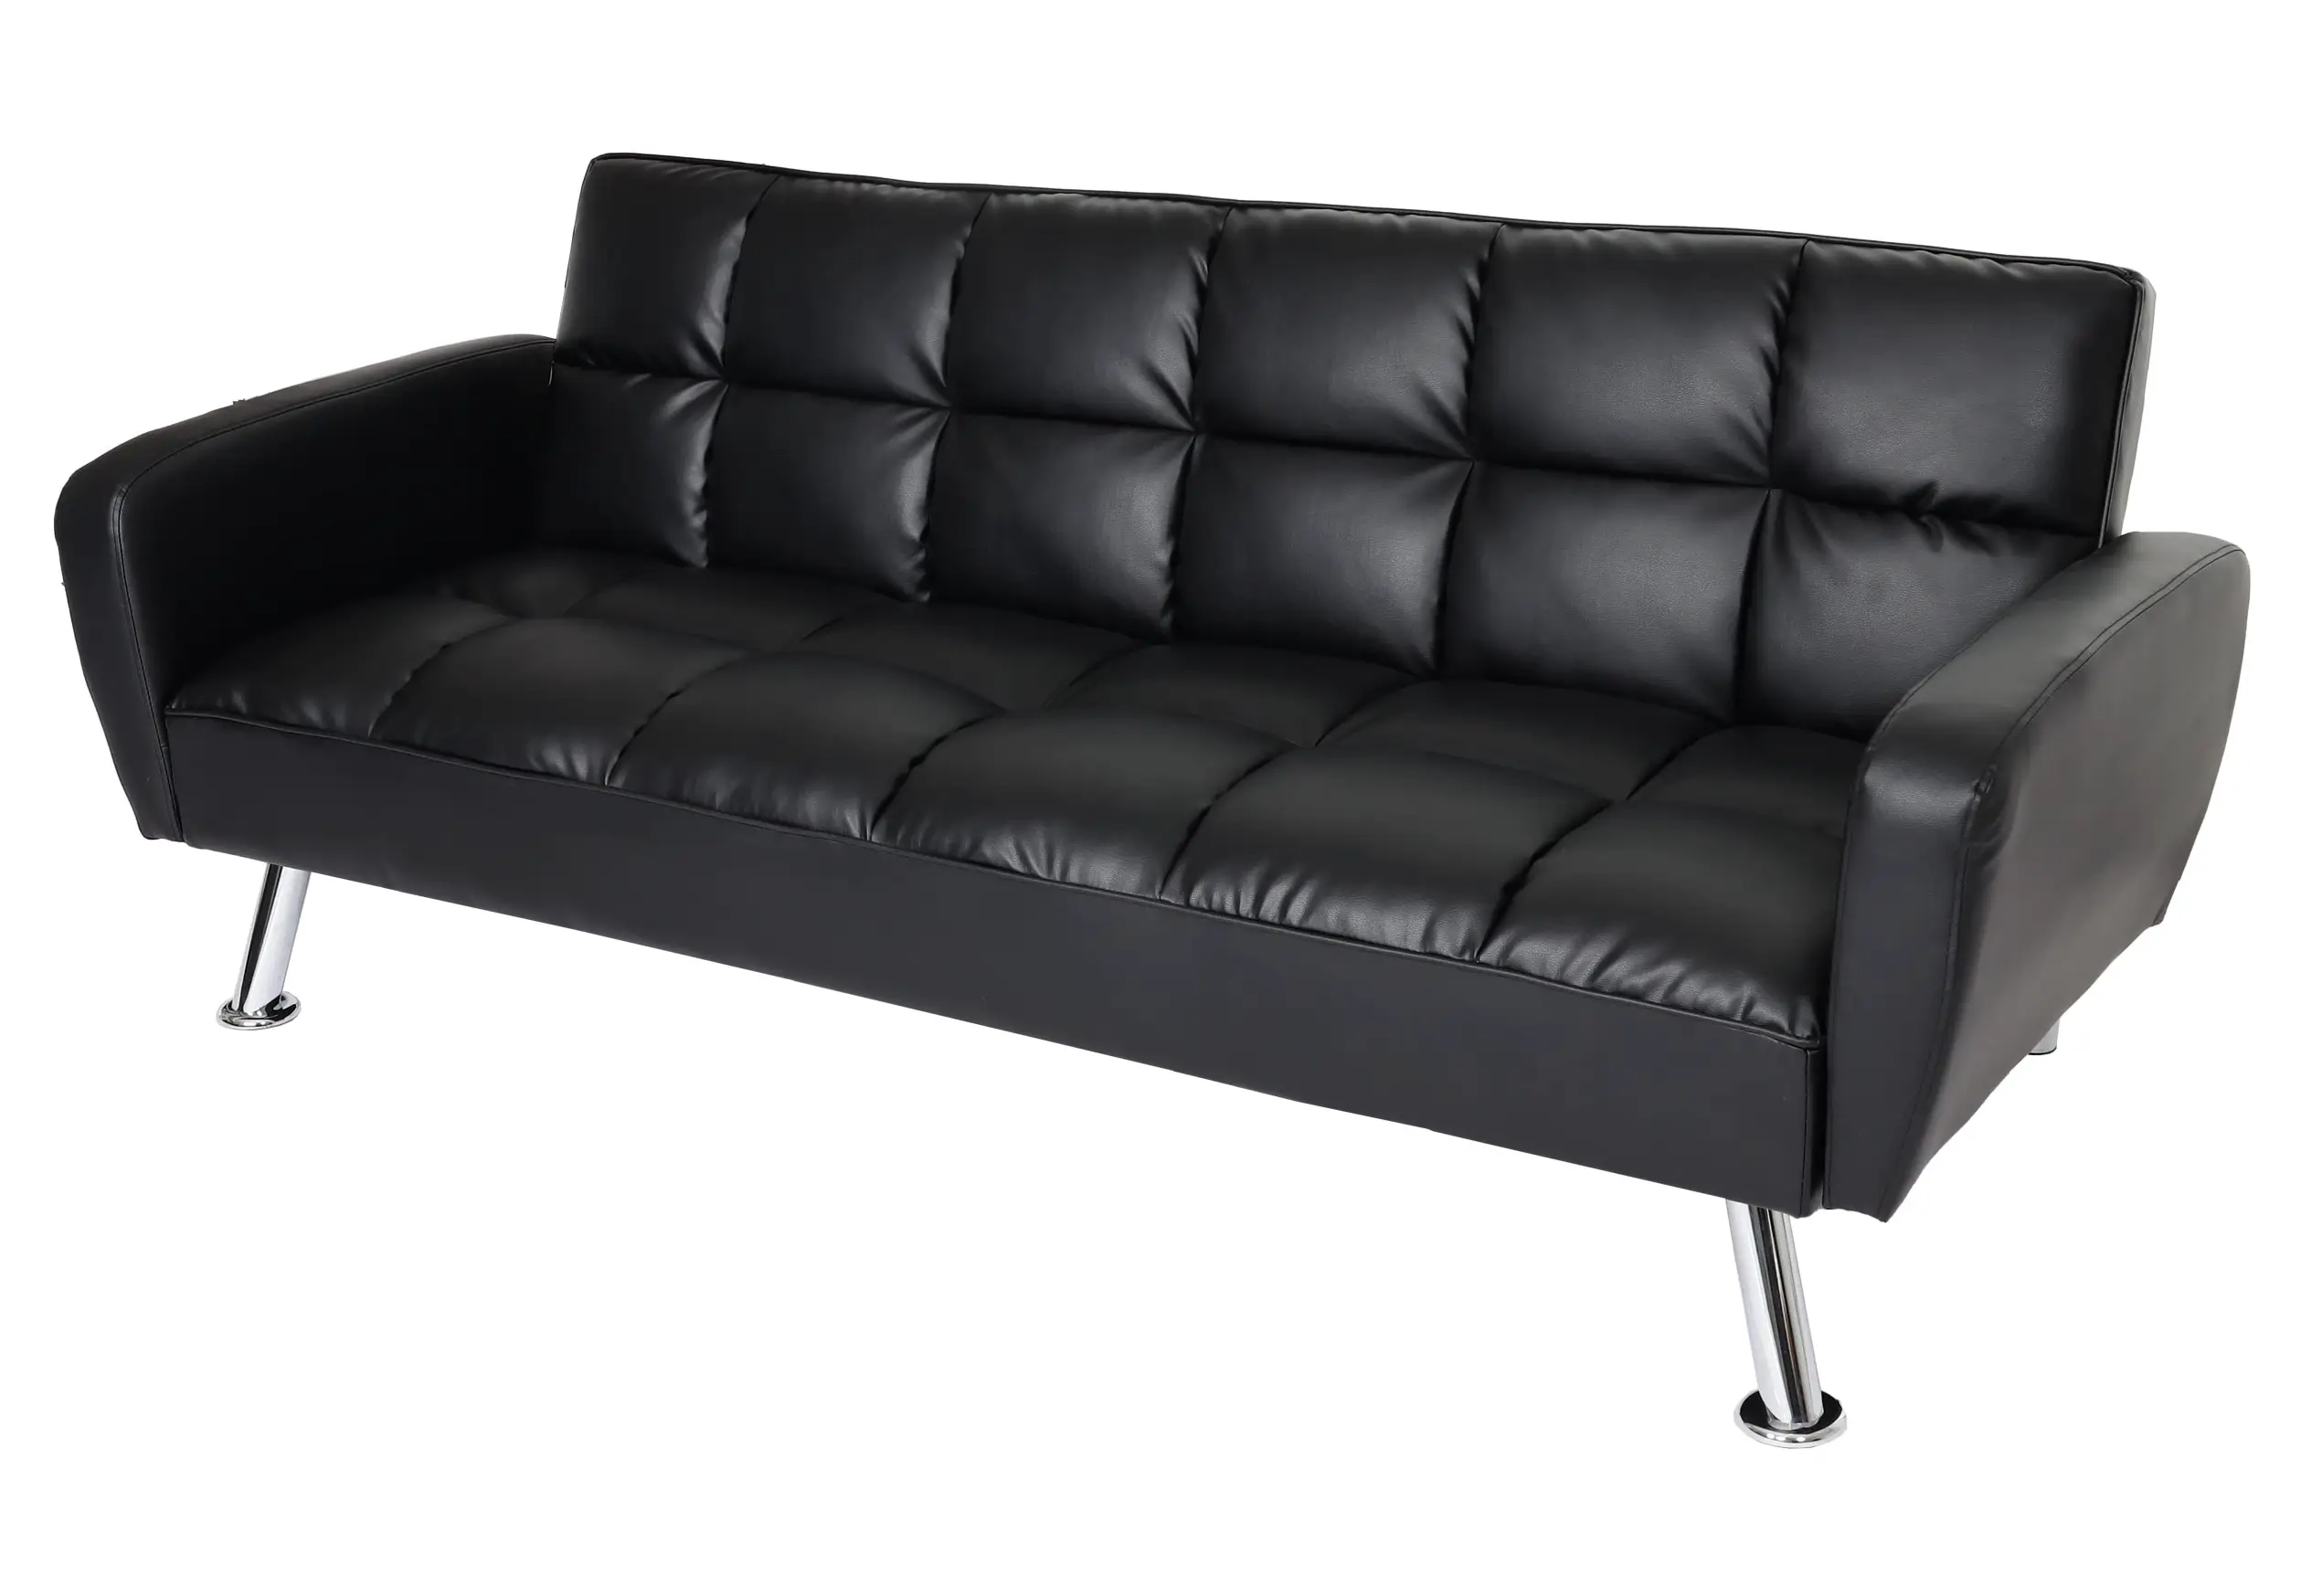 Sofa HWC-K19